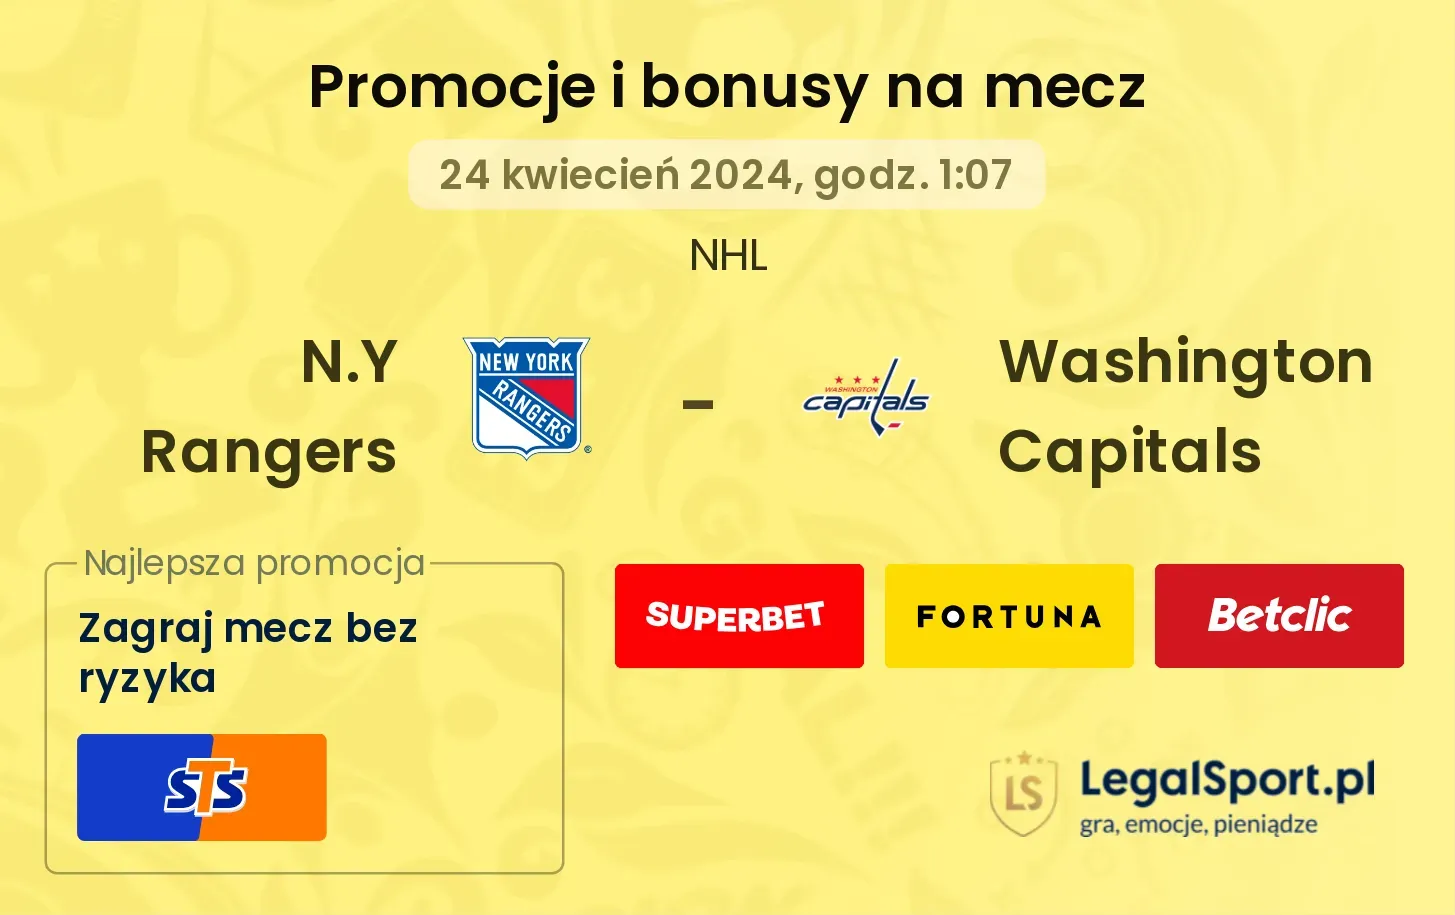 N.Y Rangers - Washington Capitals promocje bonusy na mecz